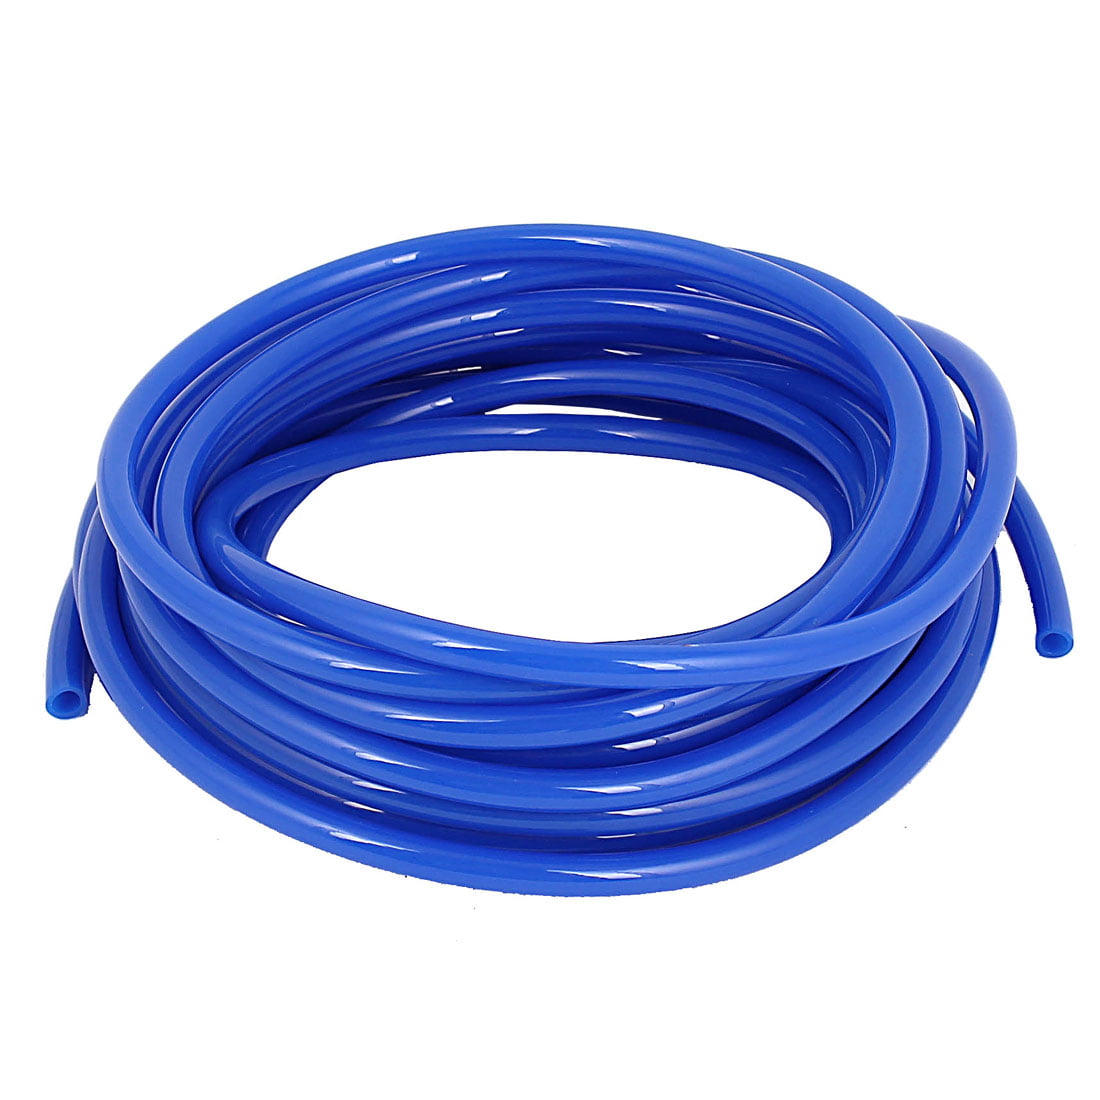 BLUE 3 x 5MM Fuel Gas Air flex Polyurethane PU Pneumatic Tube Hose Pipe 